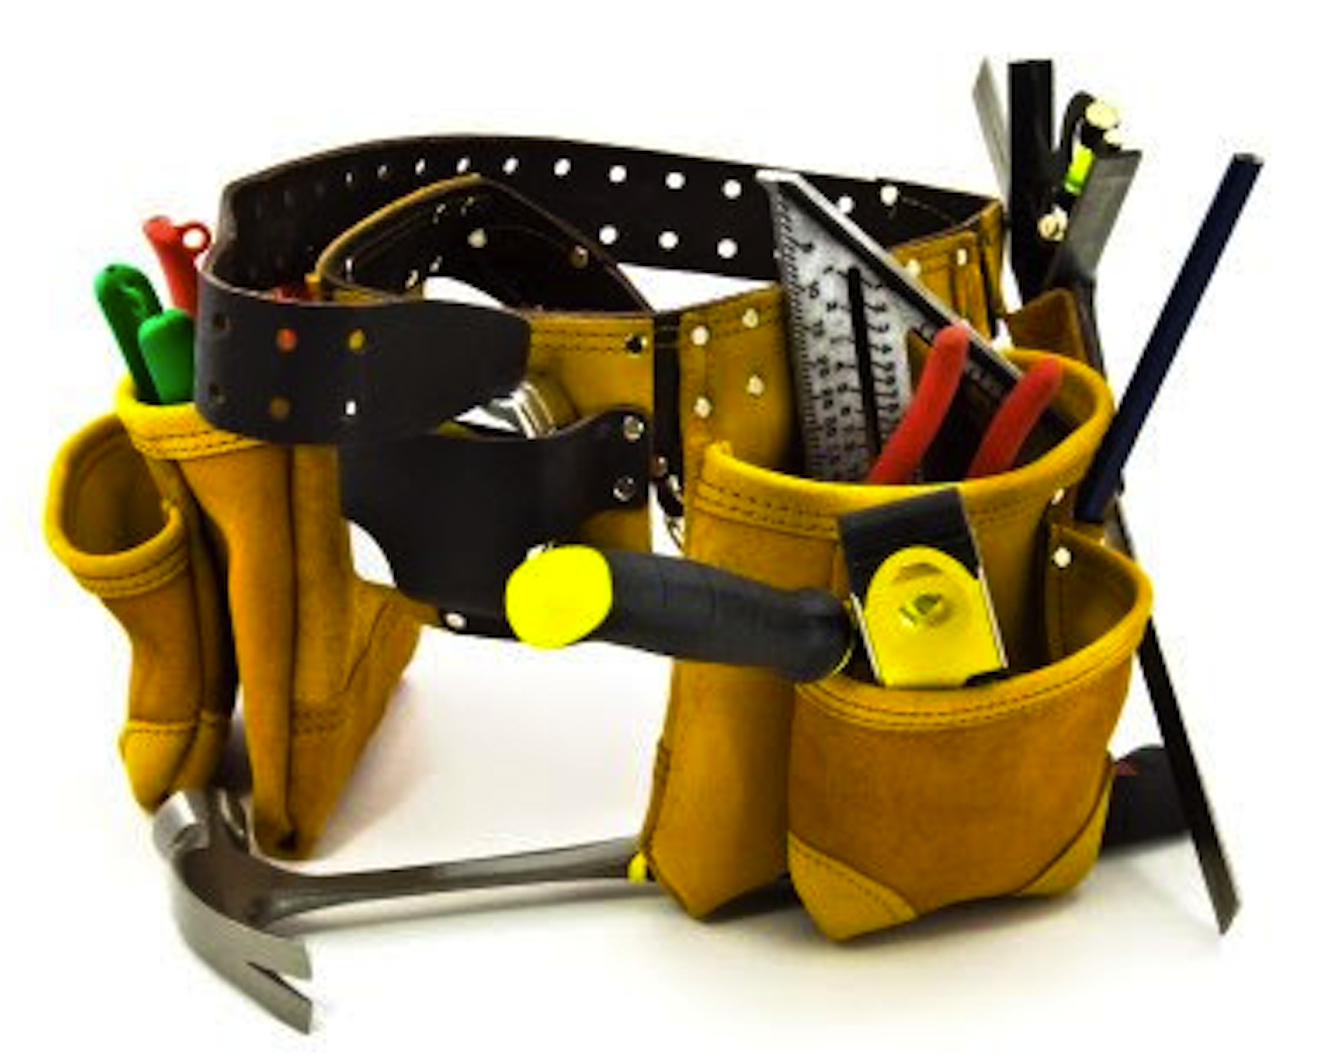 Construction Tools Clipart, Construction Equipment Illustrations ...